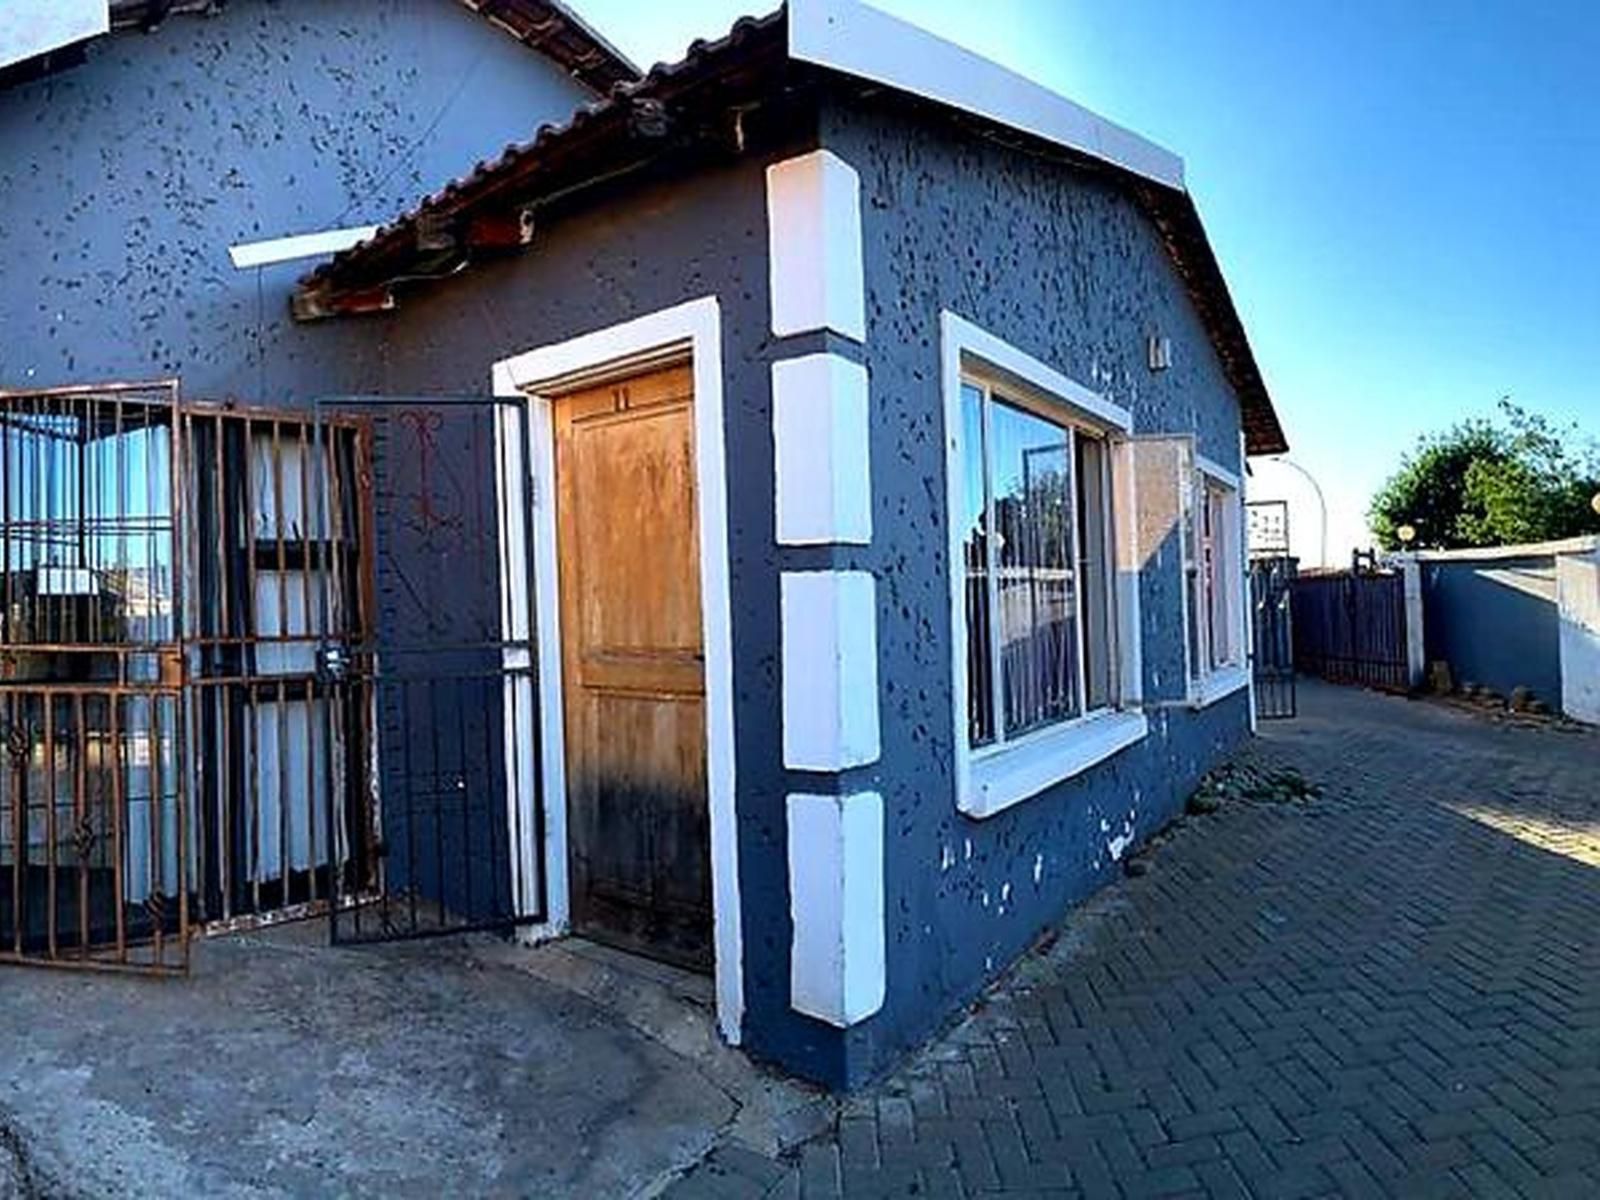 The Village Boiketlo Guest House Generaal De Wet Bloemfontein Free State South Africa Door, Architecture, House, Building